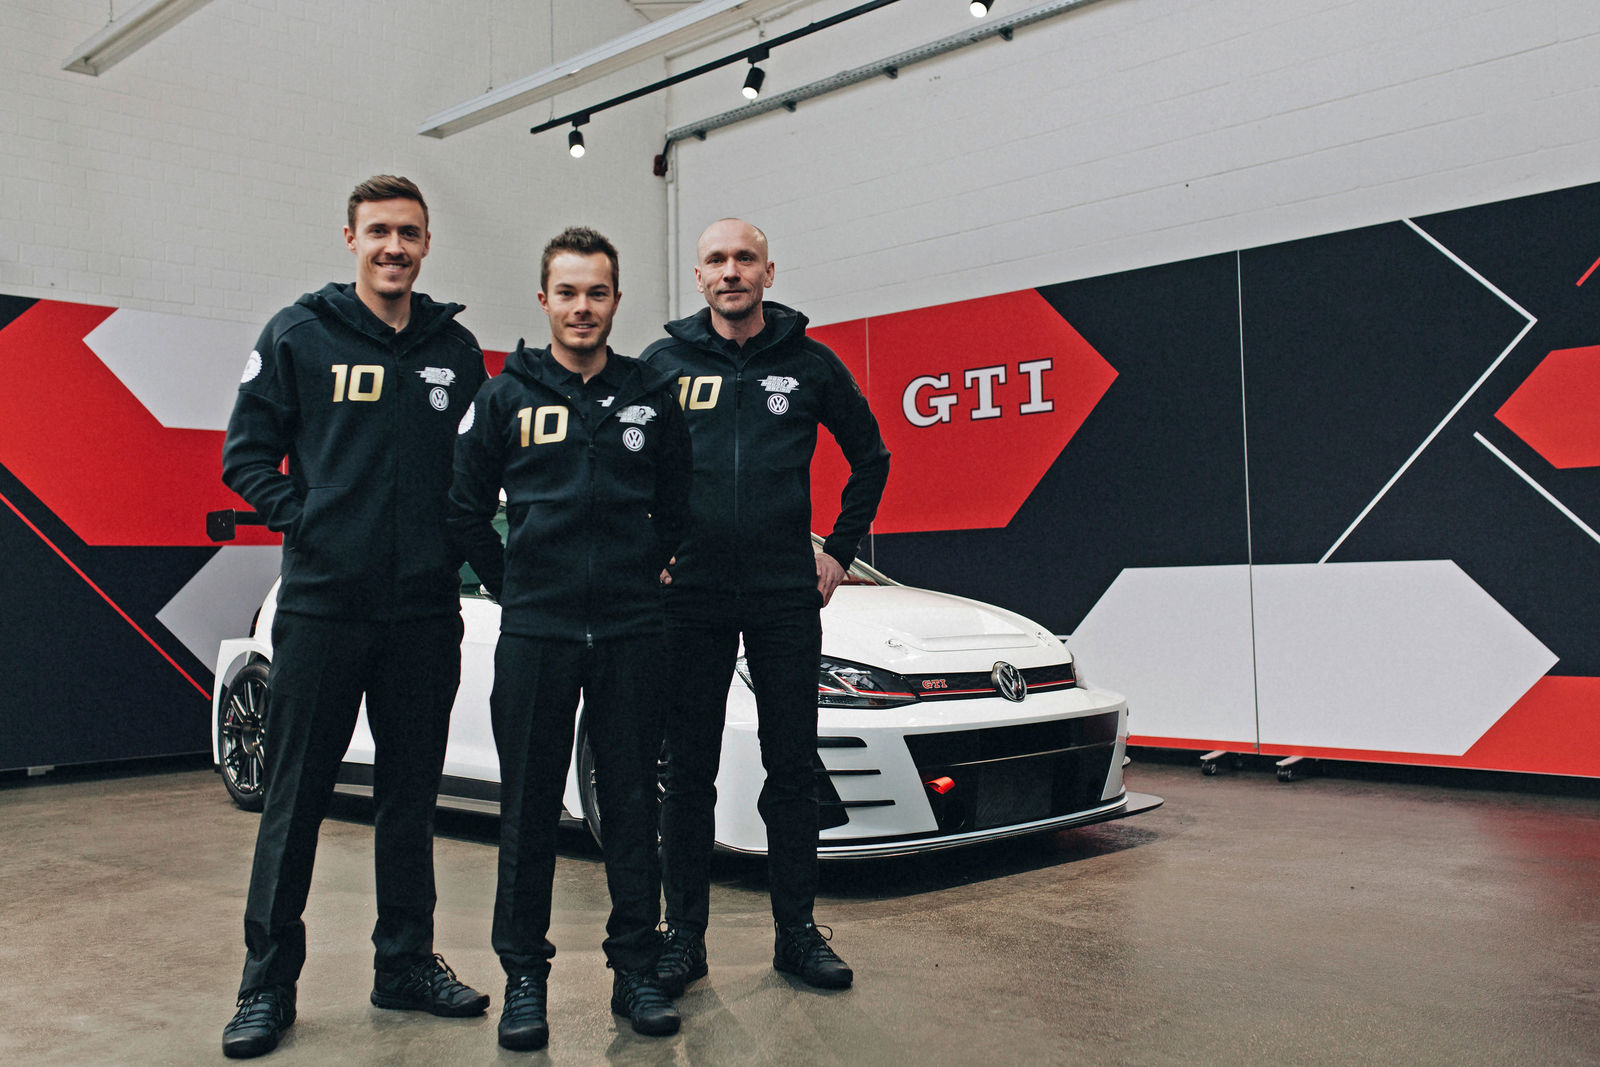 Bundesliga meets motorsport: Max Kruse Racing to run the Golf GTI in TCR Germany